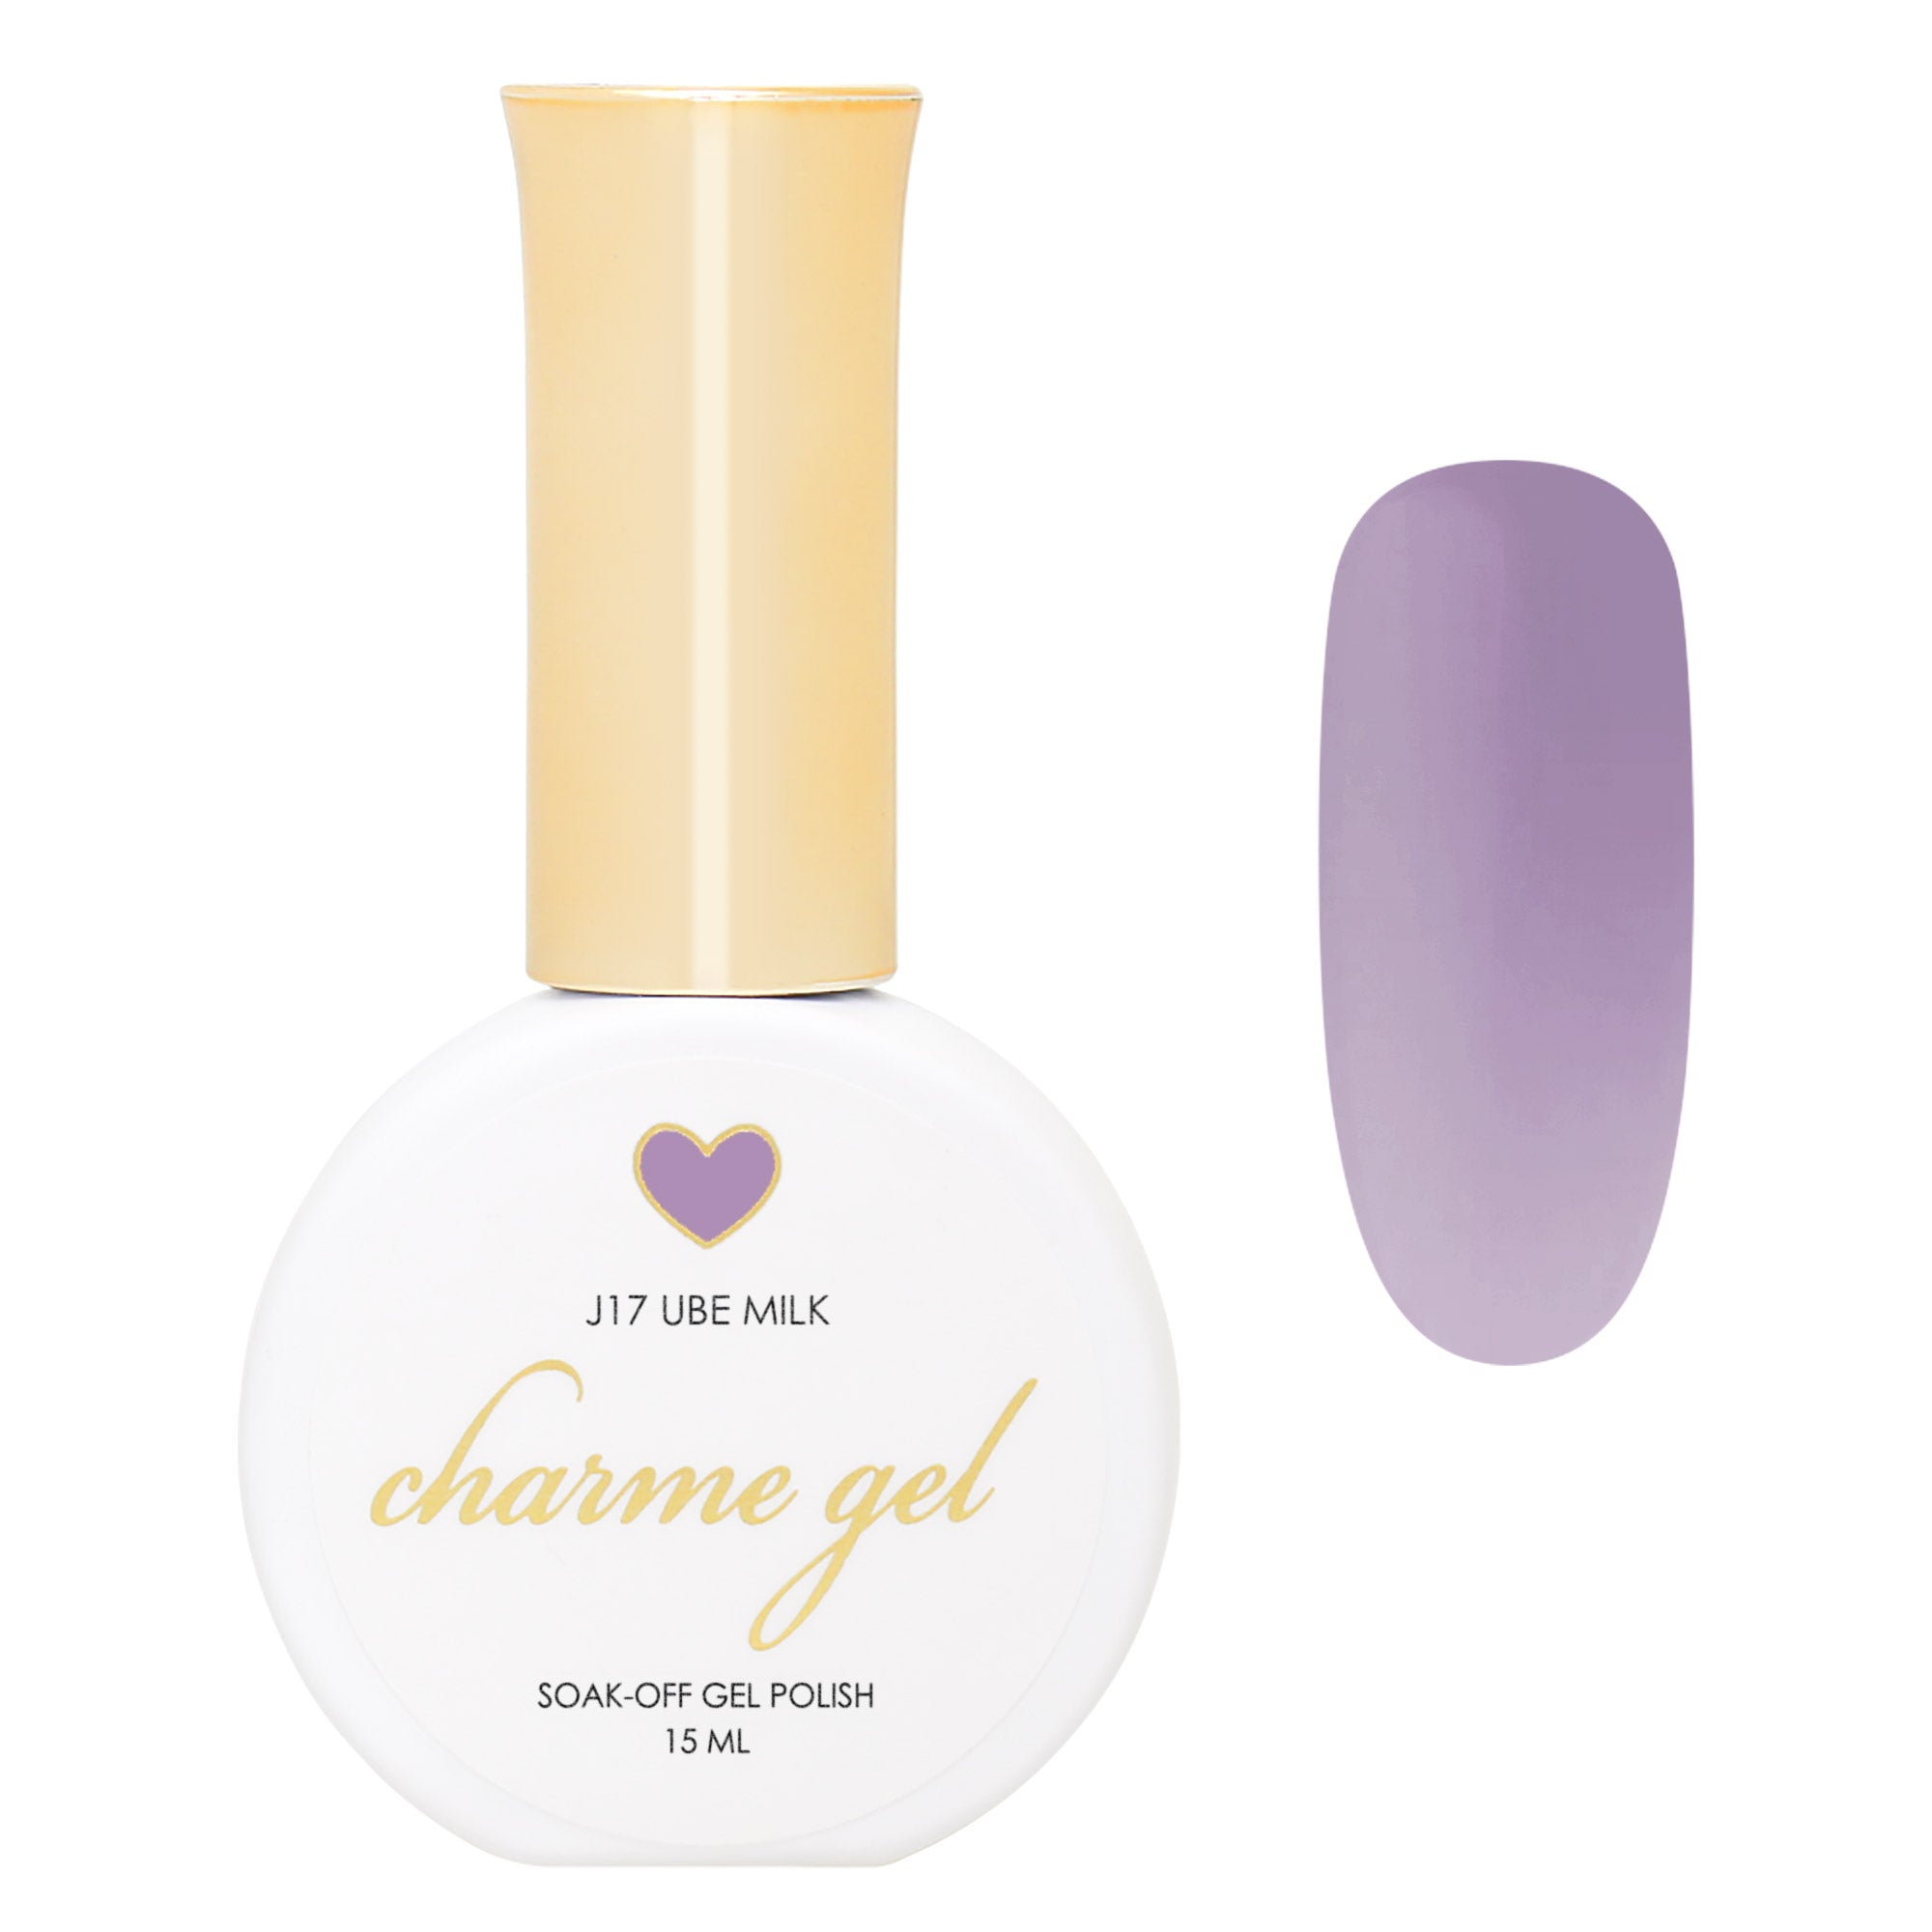 Charme Gel / Jelly J17 Ube Milk Purple Sheer Nail Polish Glazed Chrome